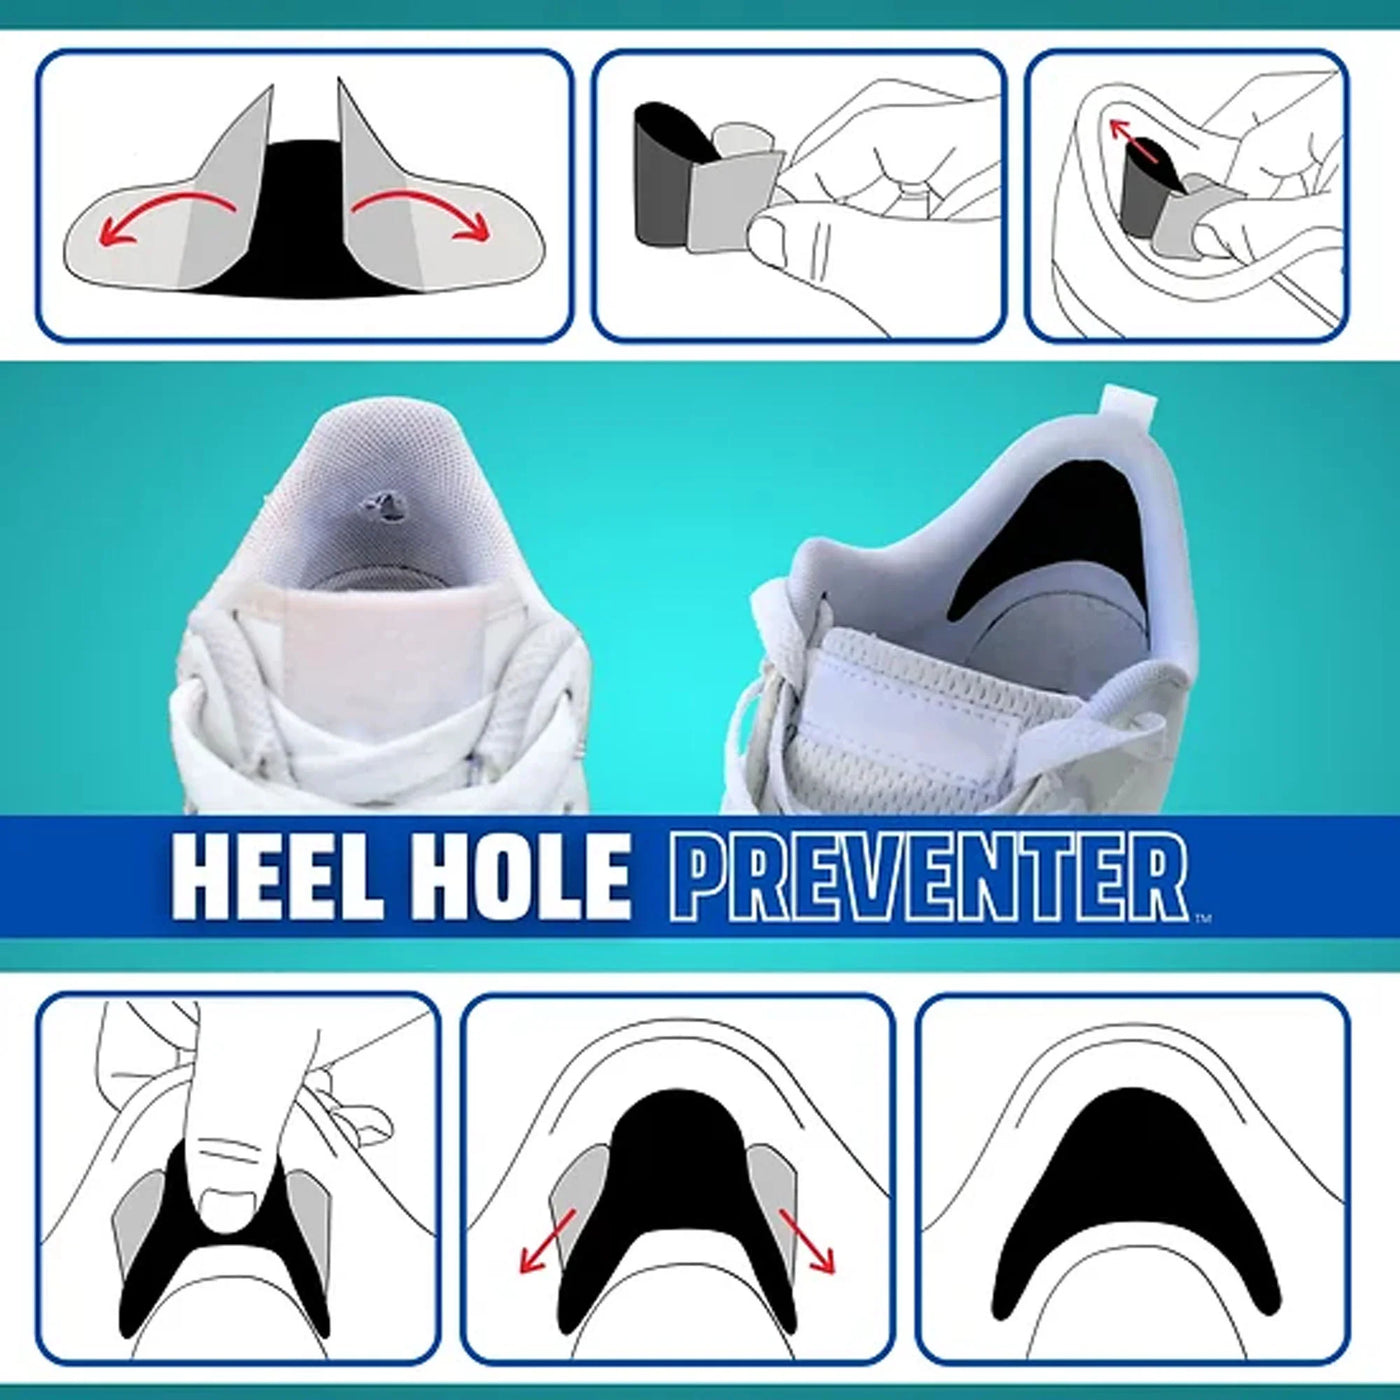 Trainer Armour - Heel Hole Preventer - Black